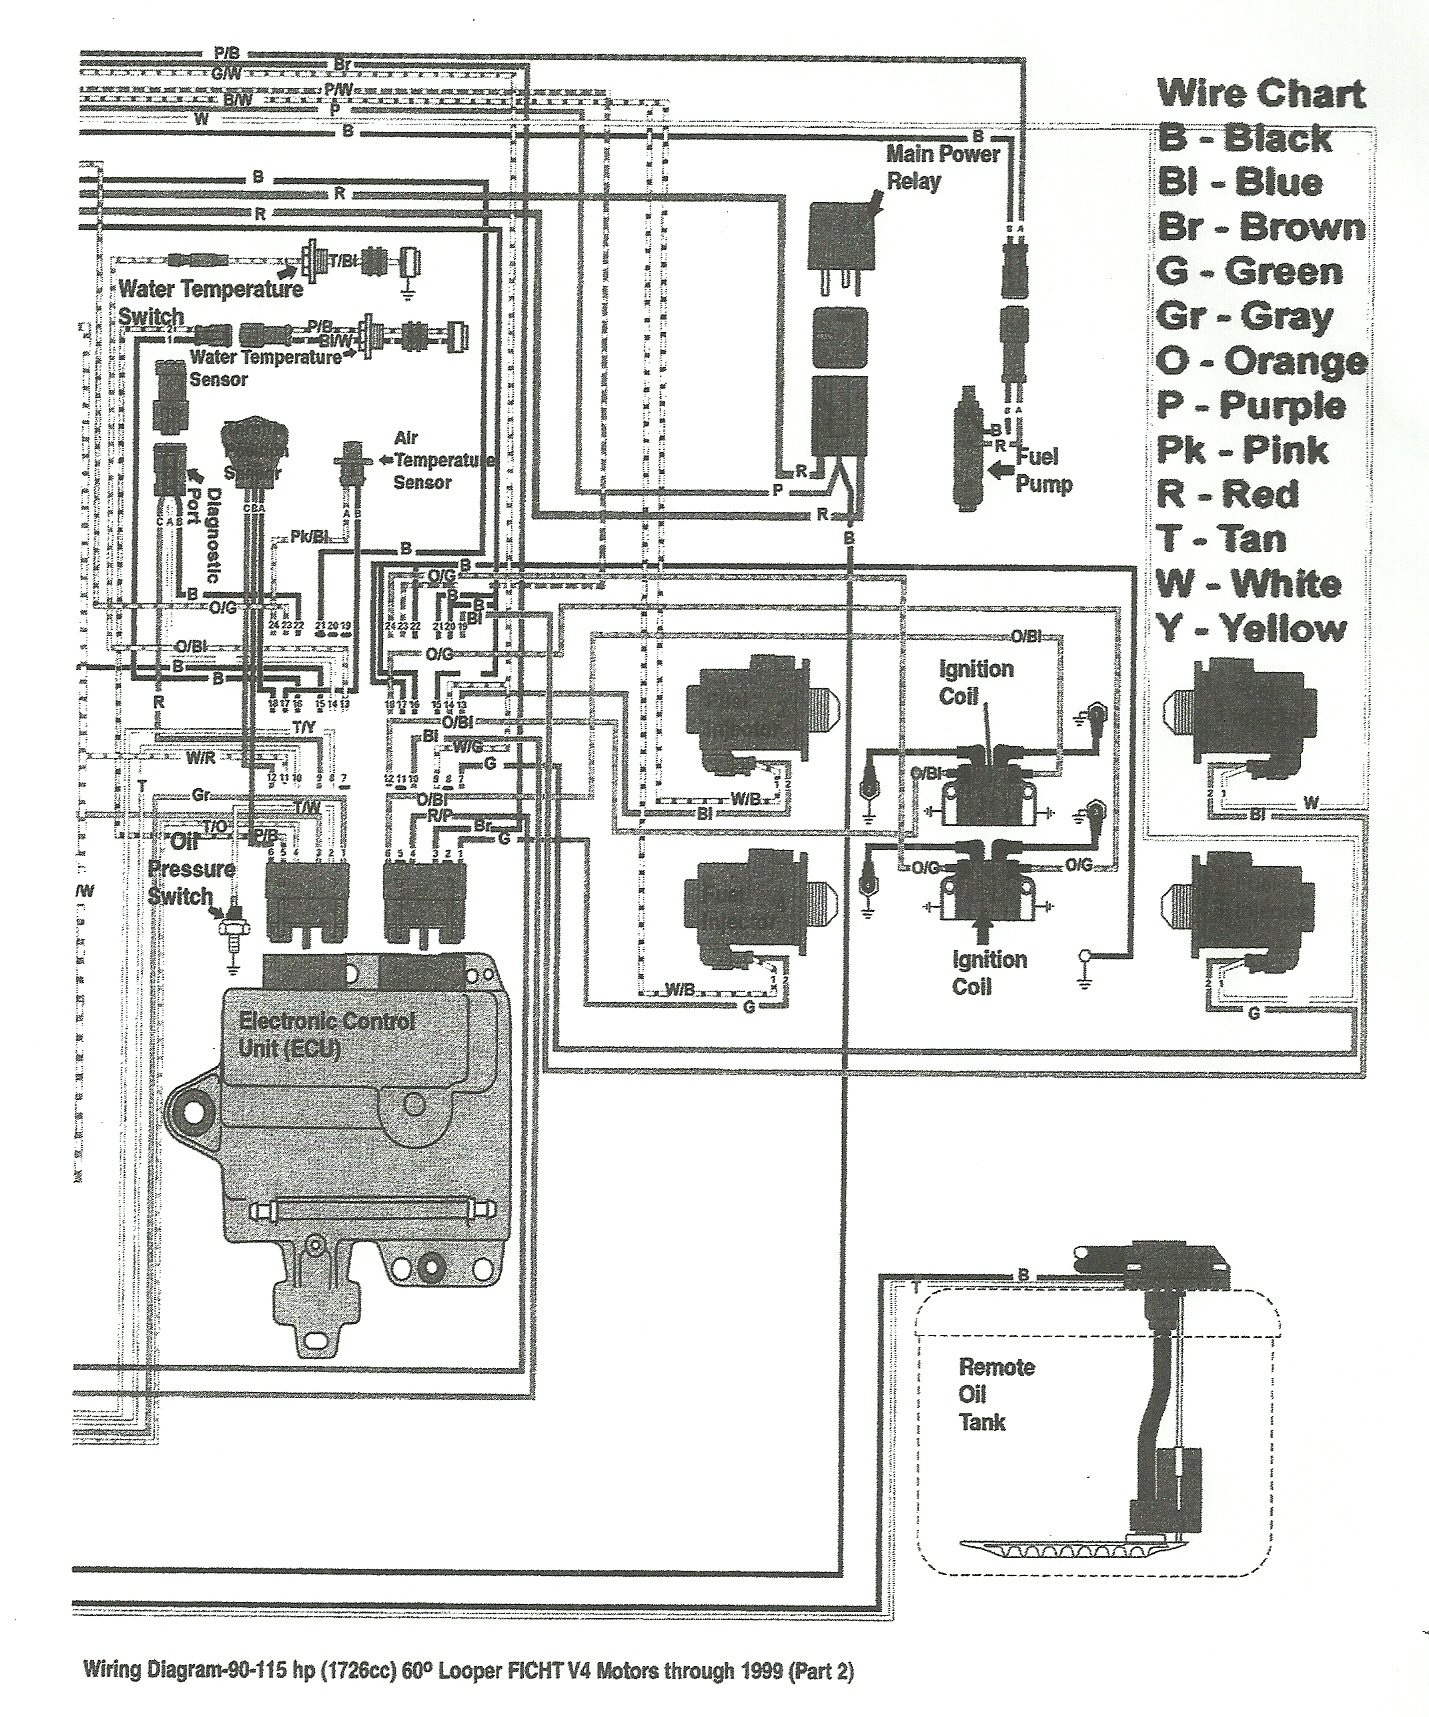 wiring diagram for evinrude 225 ficht